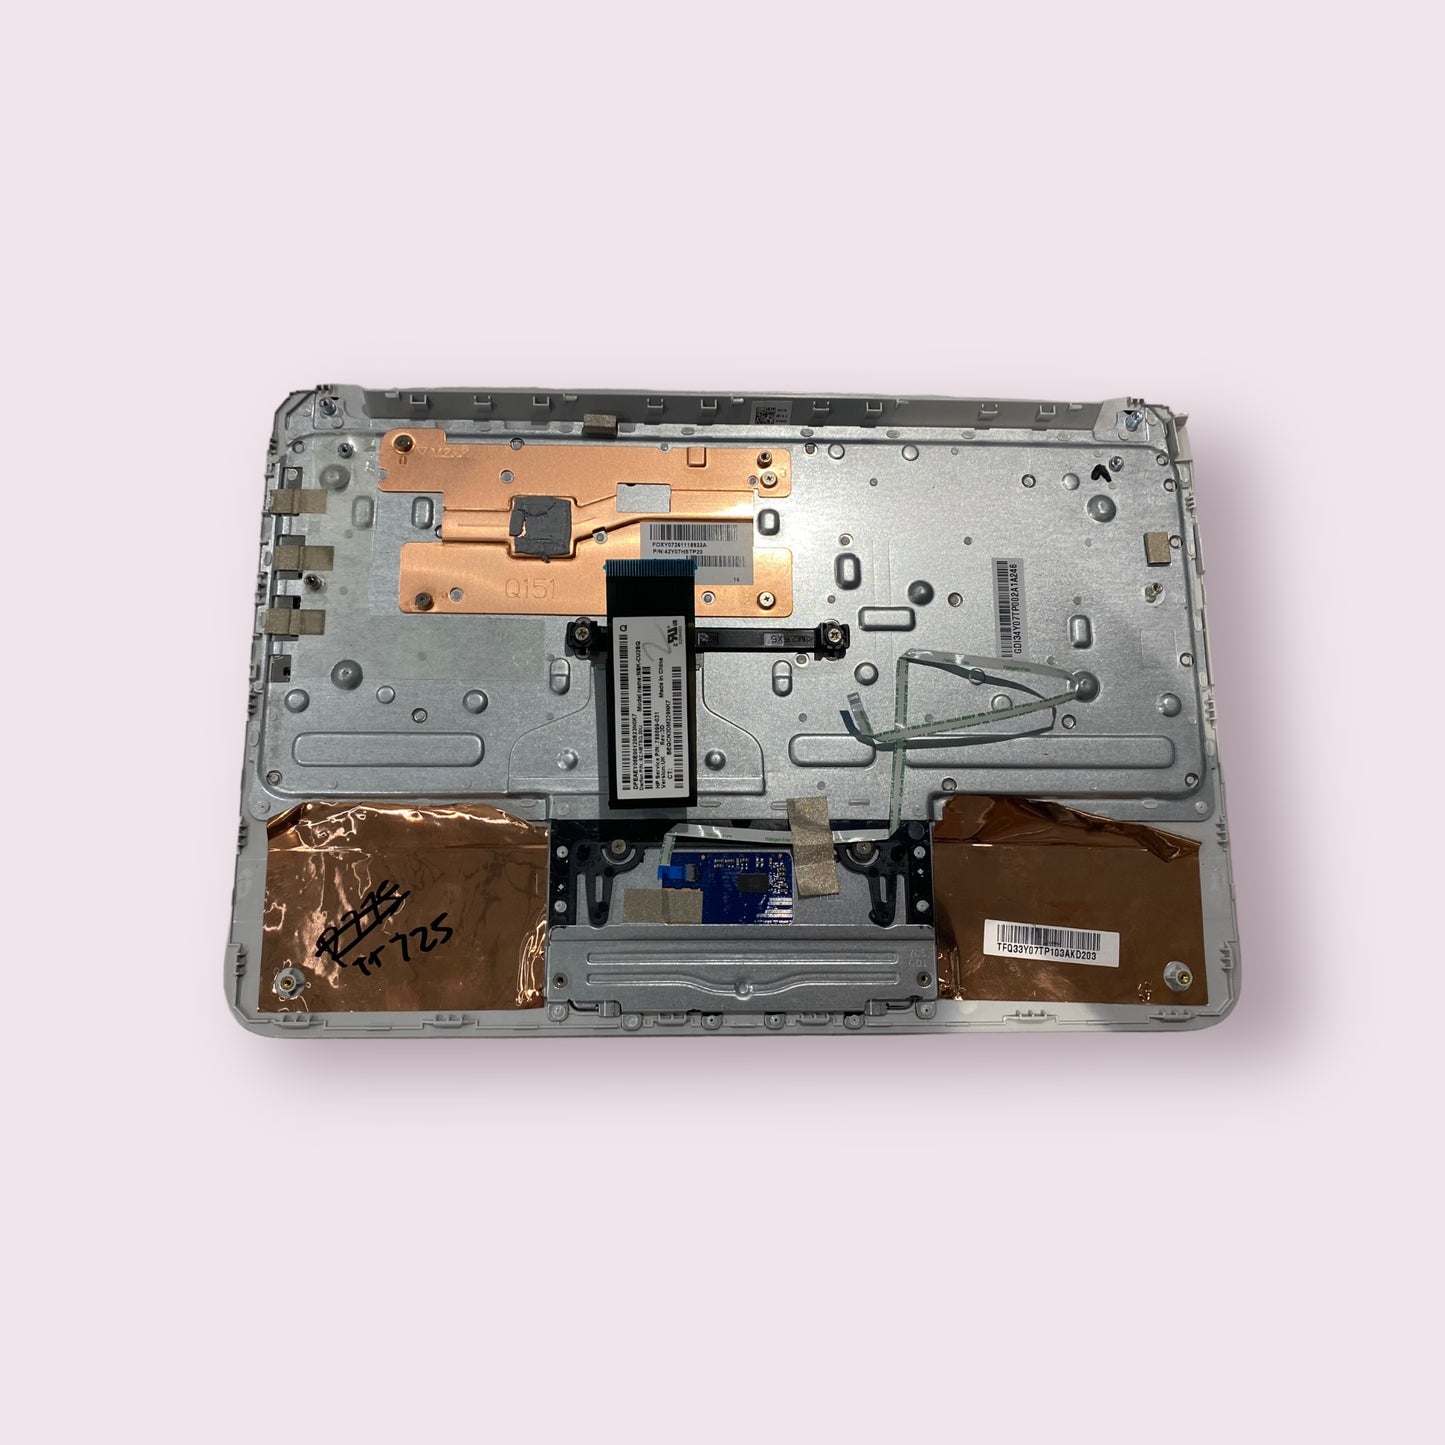 HP Chromebook 11 G4 UK Layout £ Keyboard Palmrest - Grade B - Genuine Pull Part